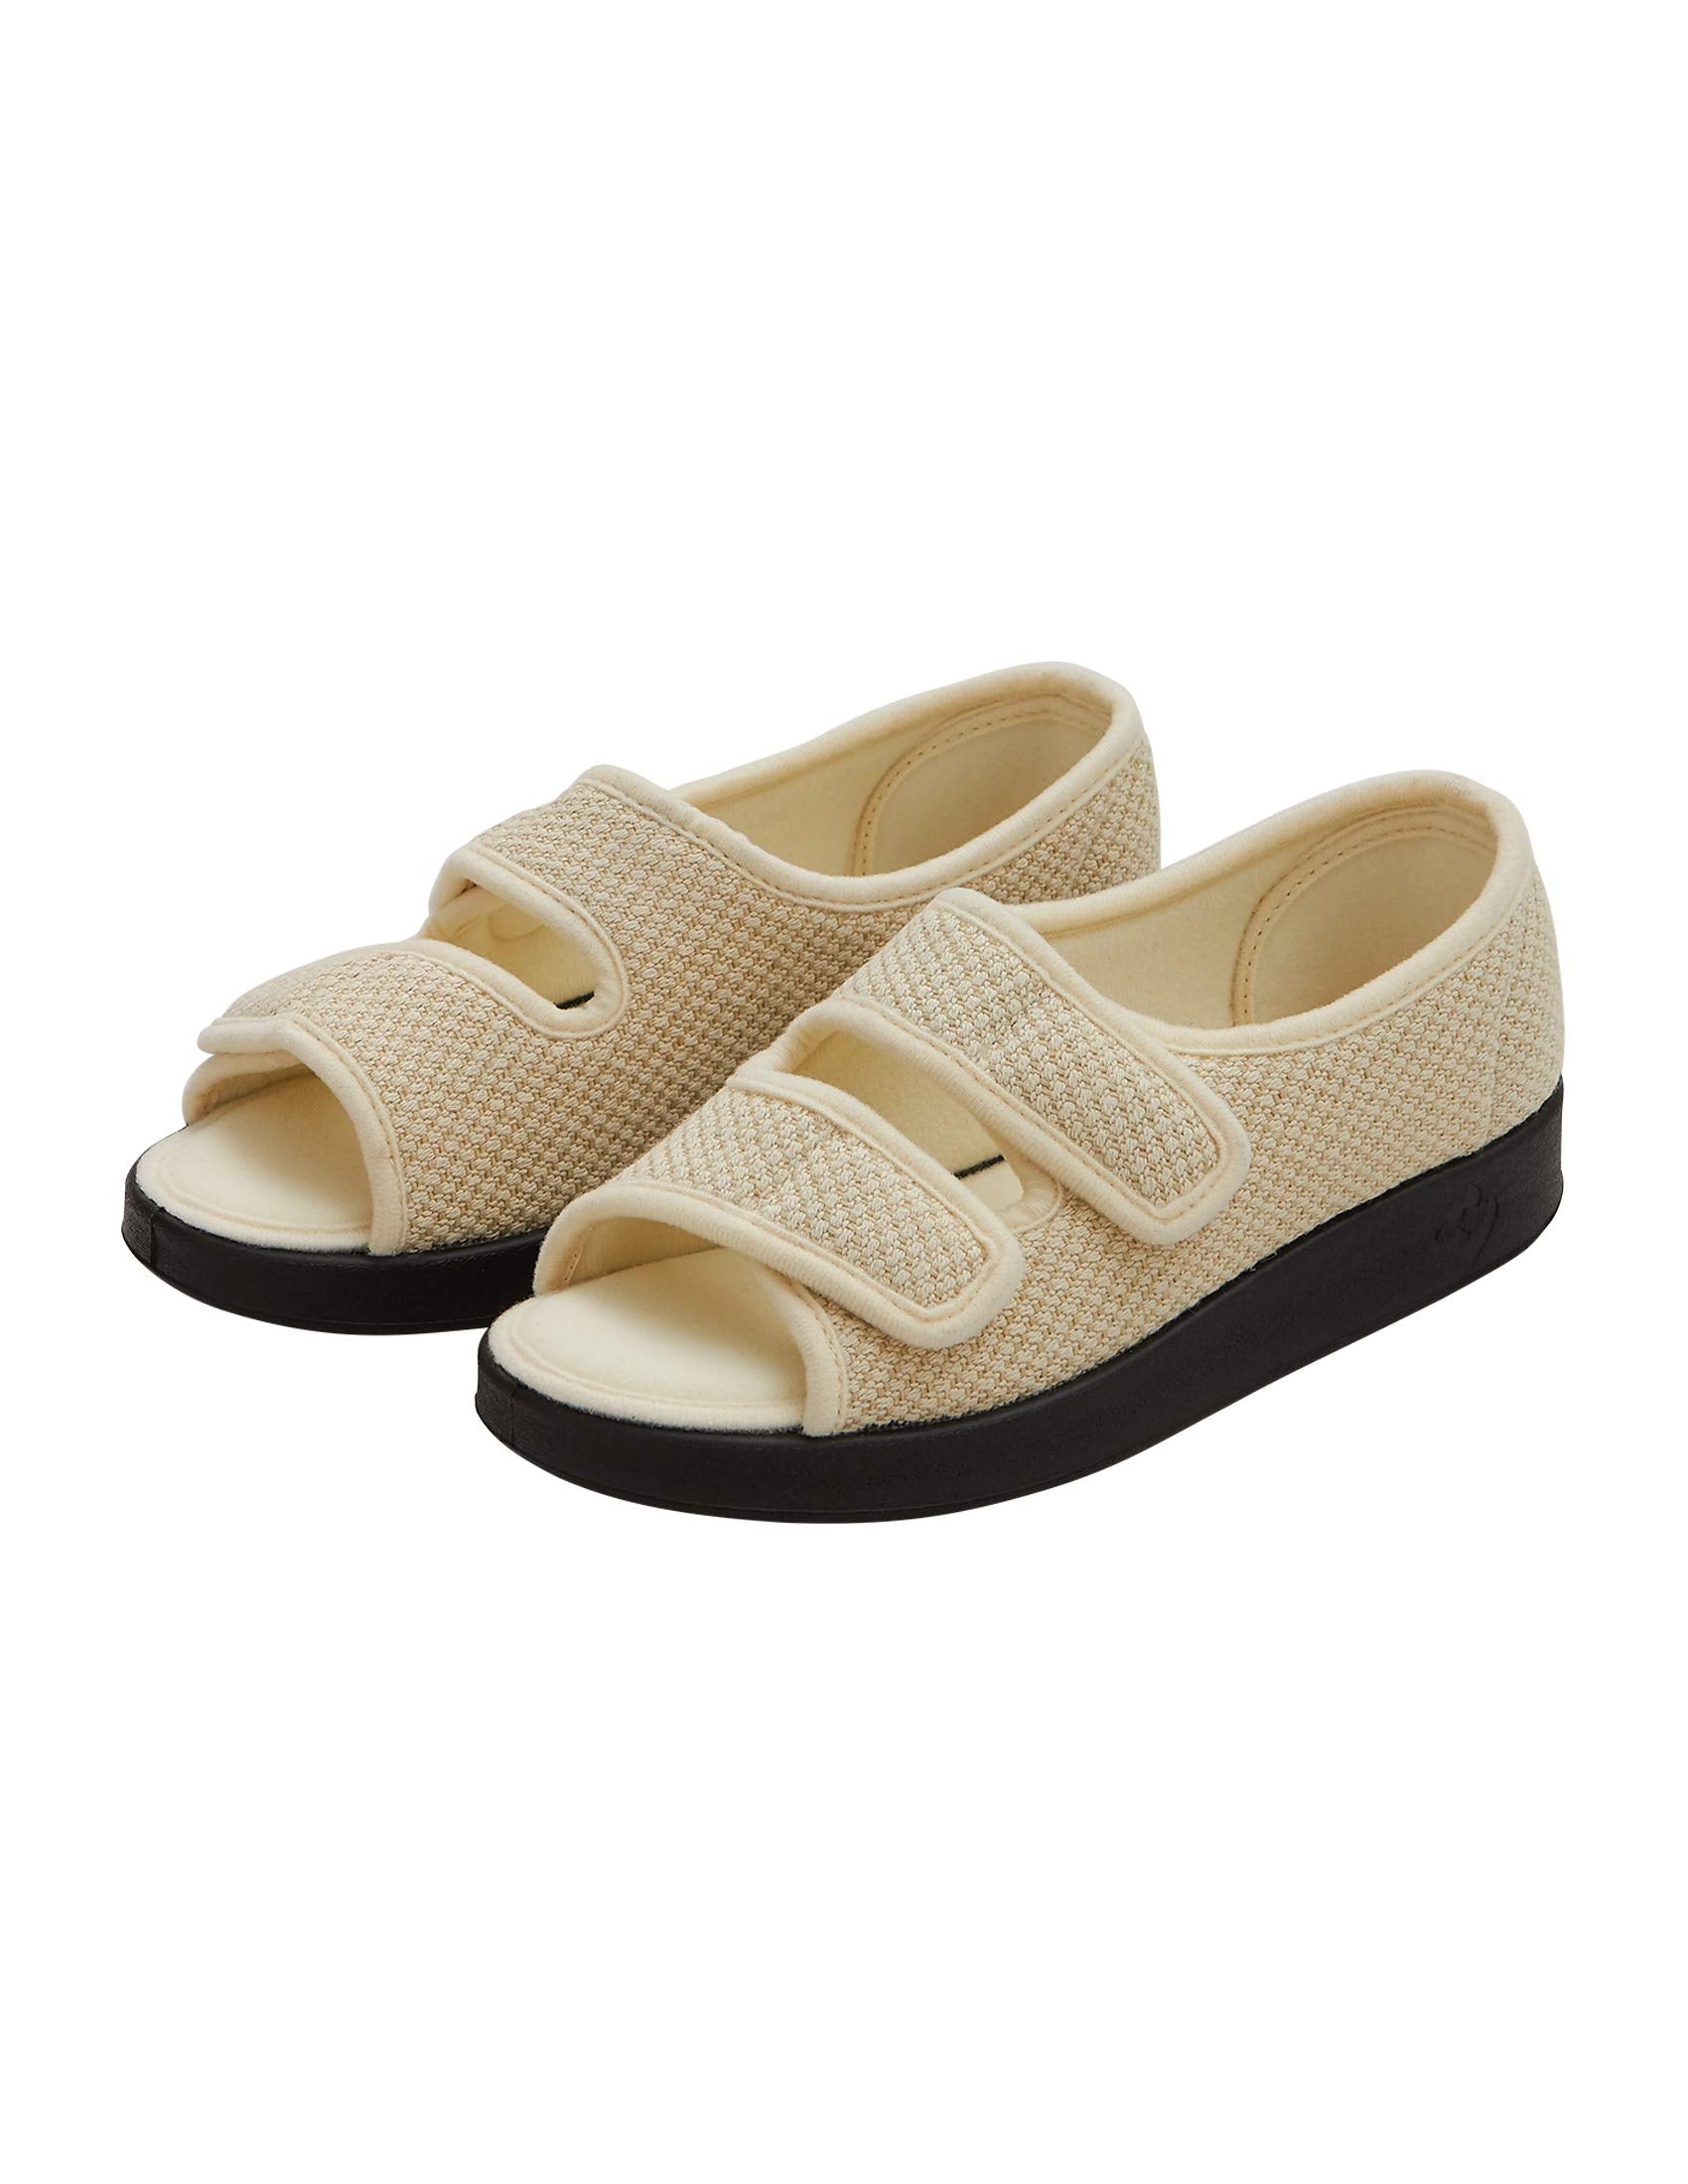 Silverts Women's Open Toe Shoes - Diabetic Shoes for Women Wide Width, Adaptive Clothing for Women - Diabetes Lymphedema Edema Arthritis Swollen Feet - Non Slip Slippers - Natural/Black 9